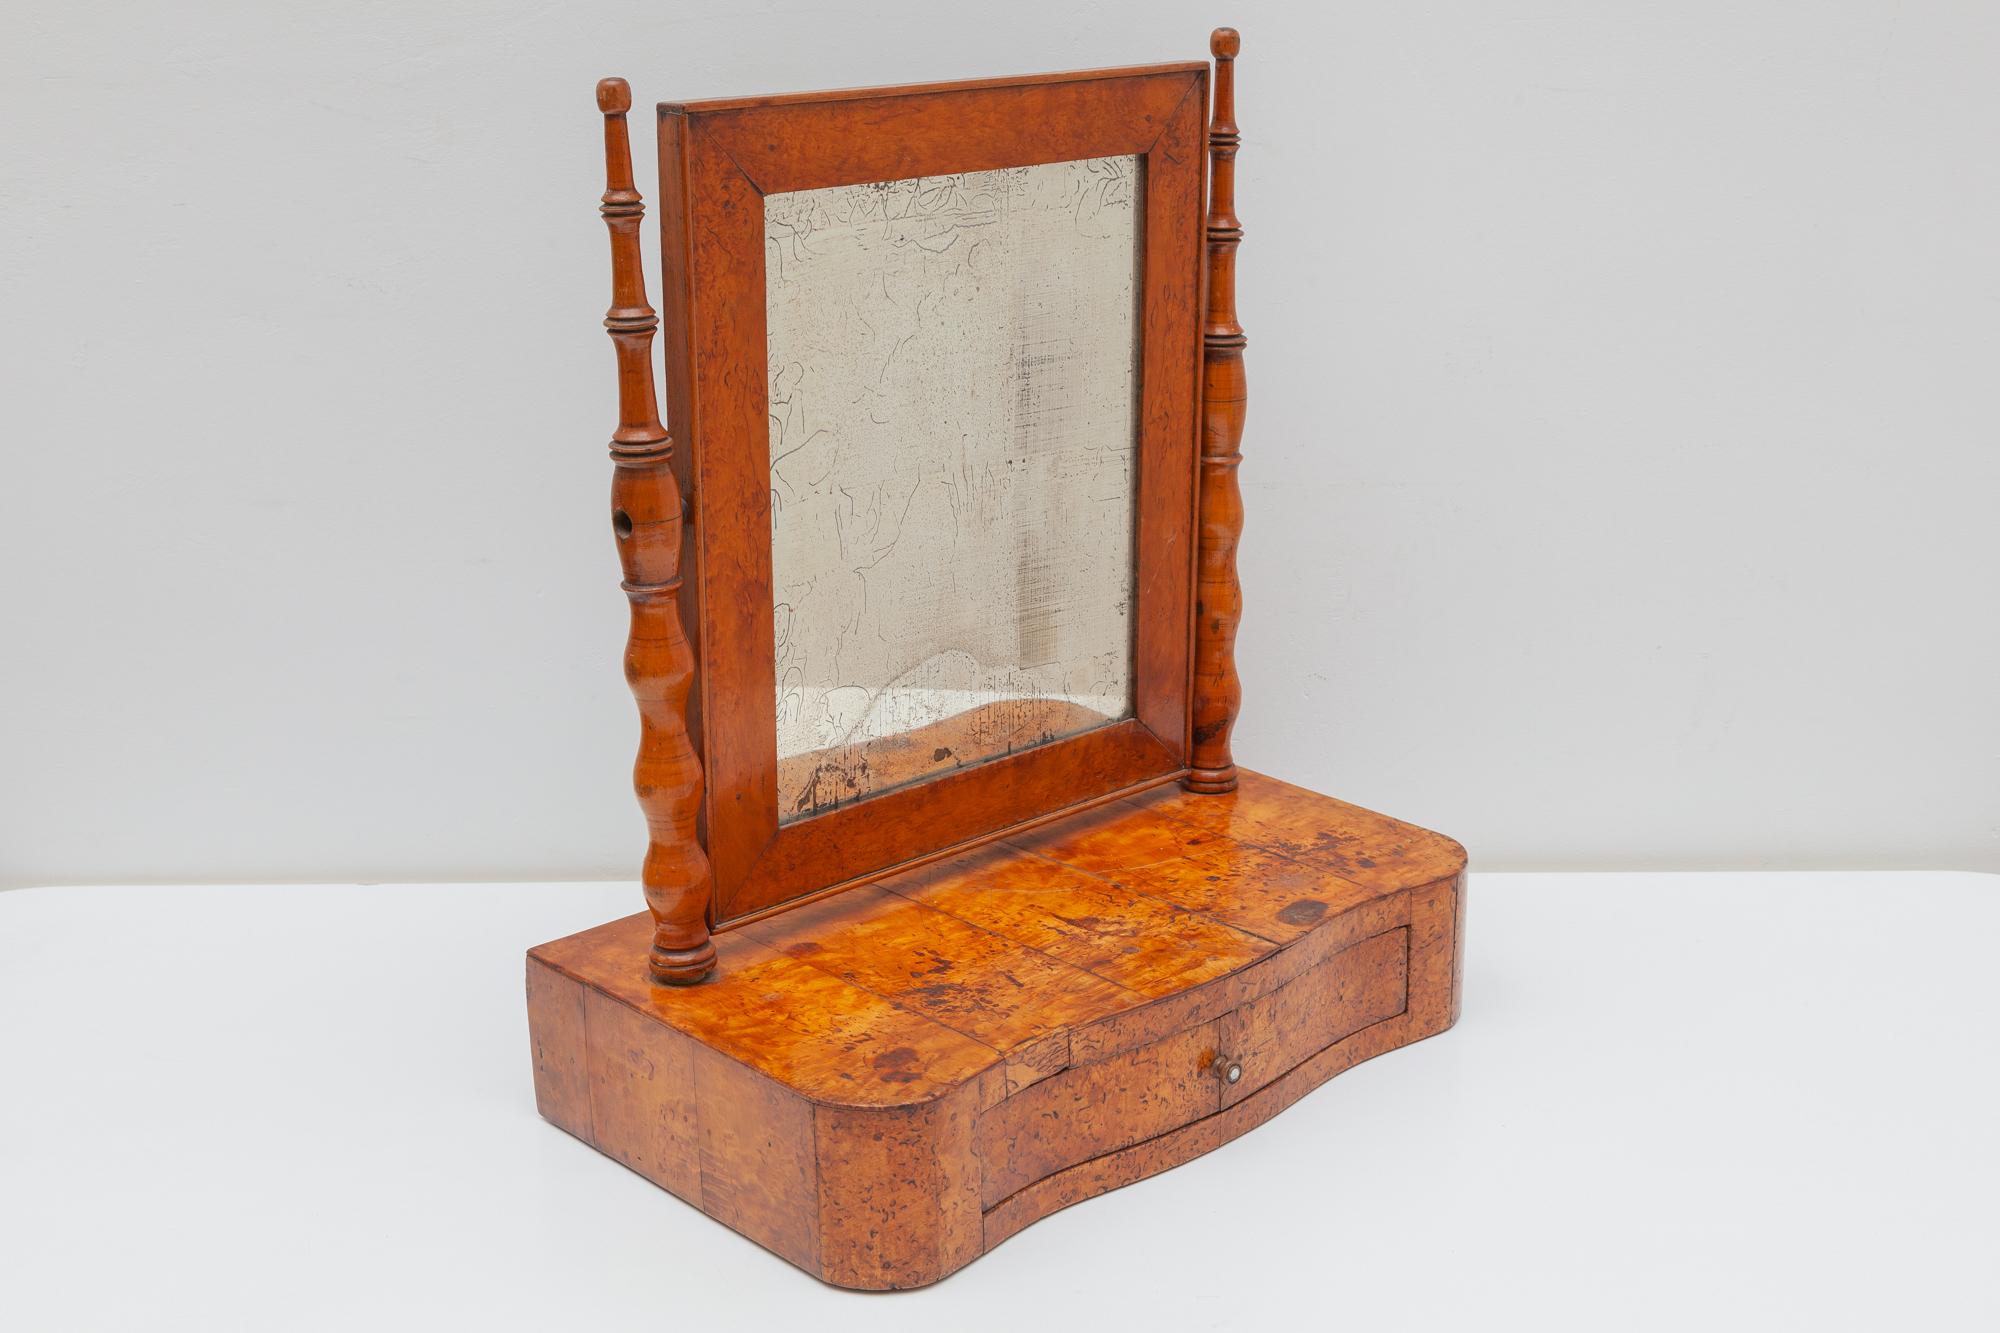 Hand-Crafted Antique Biedermeier Vanity Table Mirror in Burlwood, 19th Century, Germany For Sale